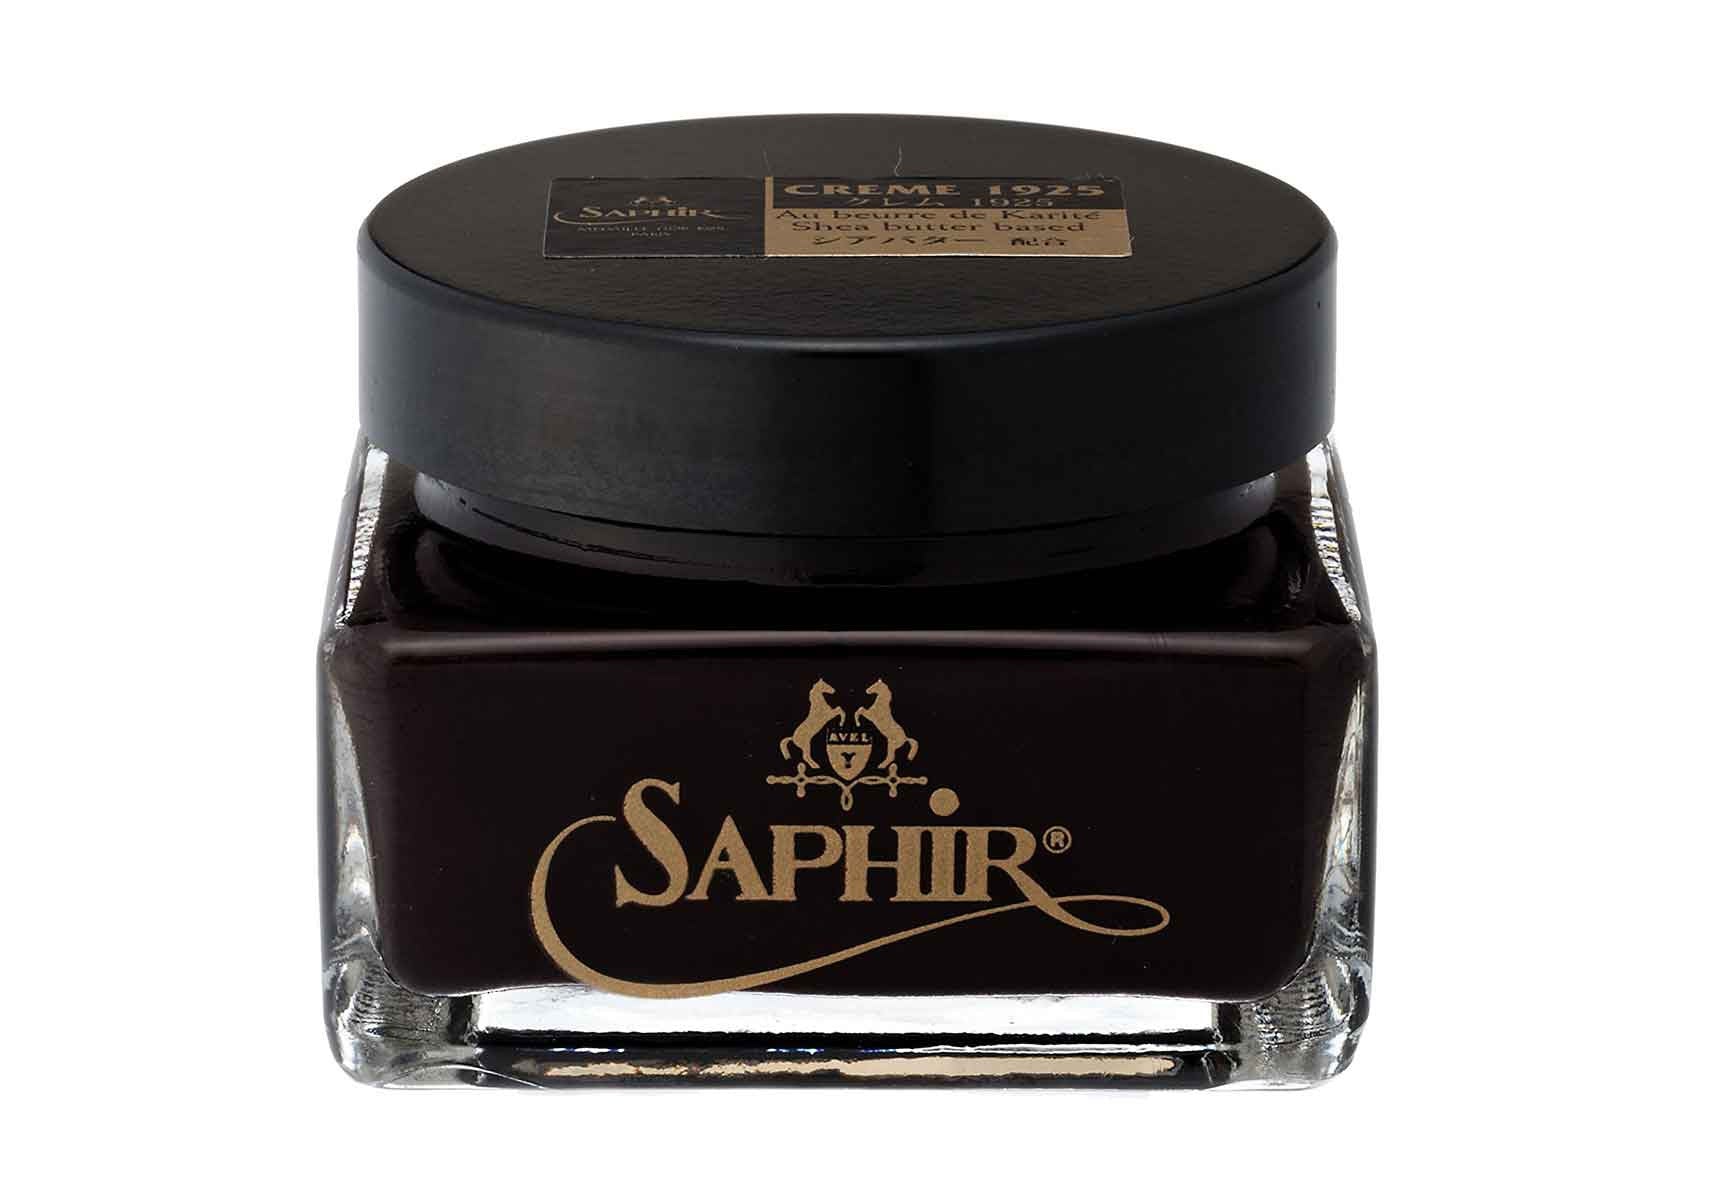 Saphir 1925 Pommadier Cream Shoe Polish